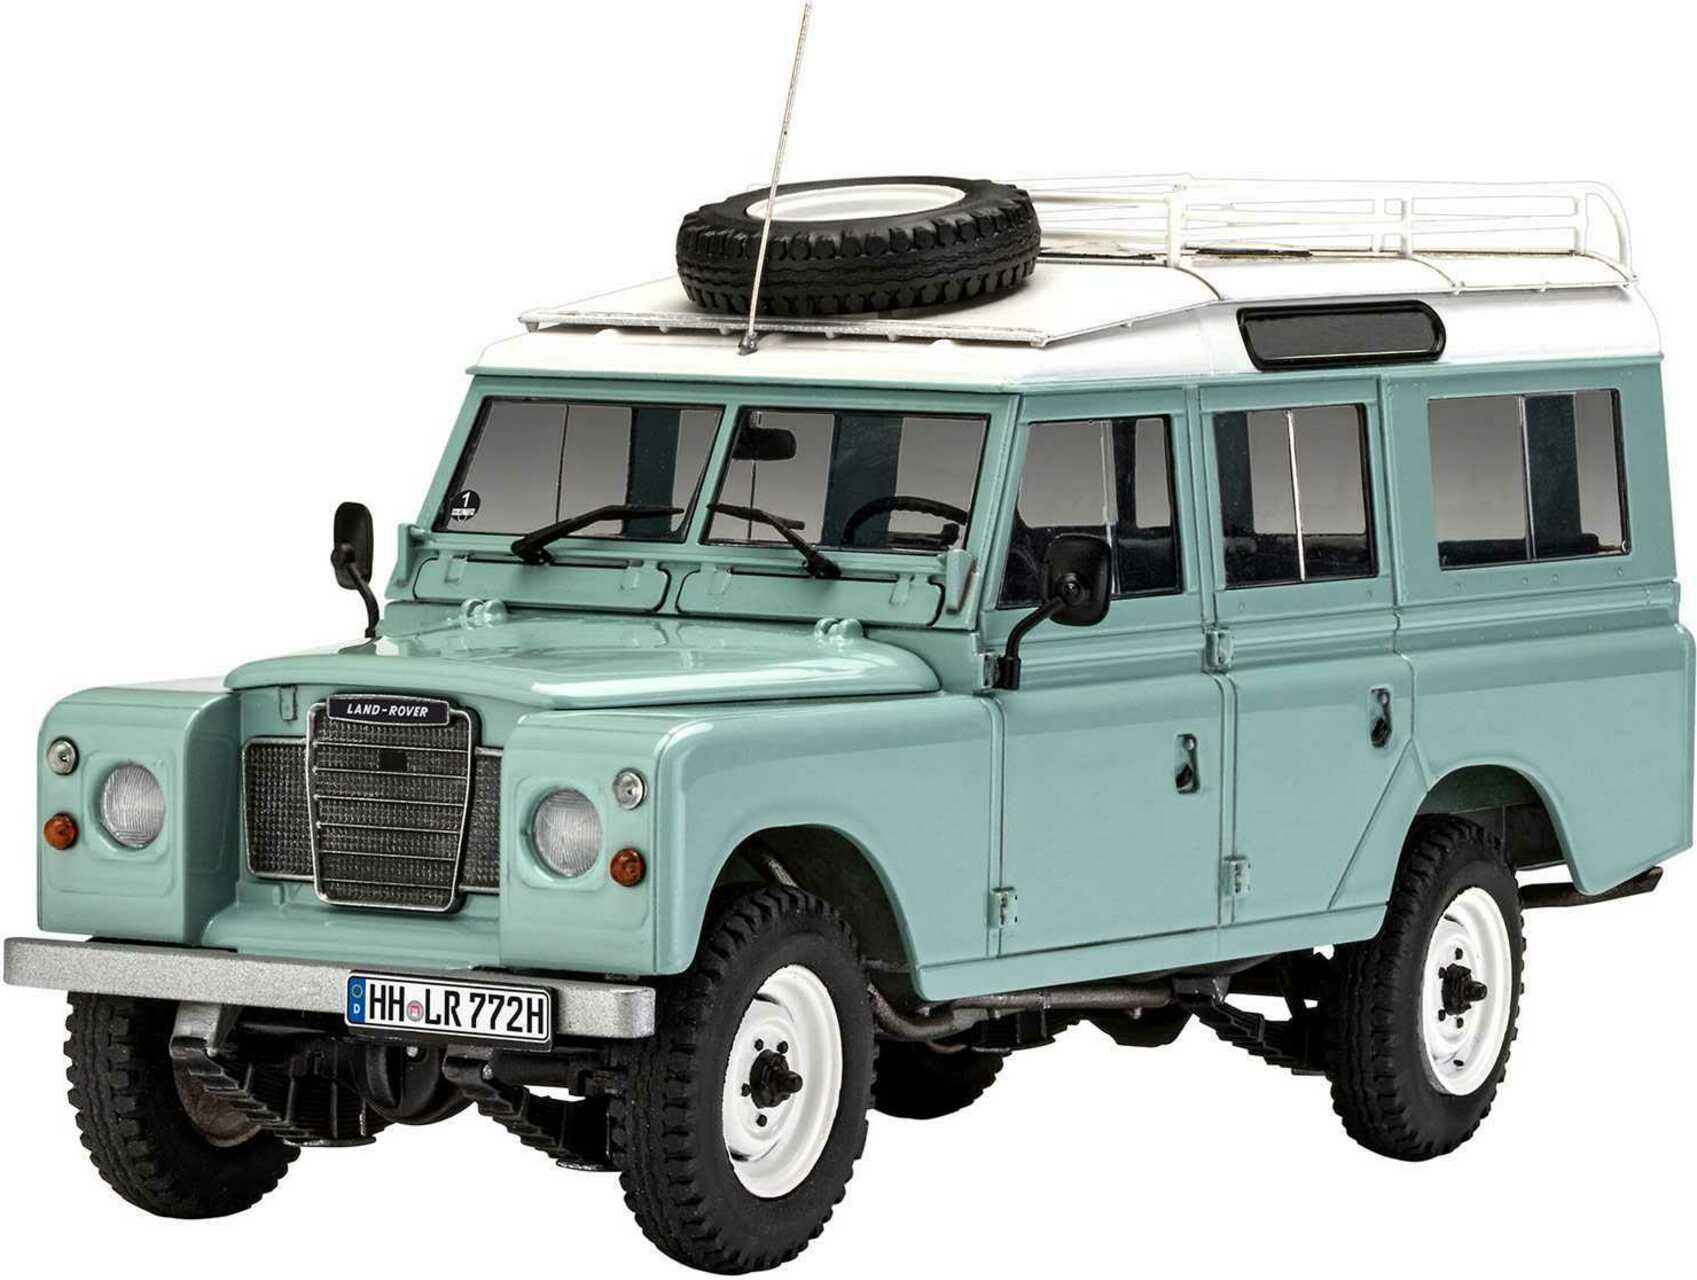 Modelset auto 67047 - Land Rover Series III (1:24)